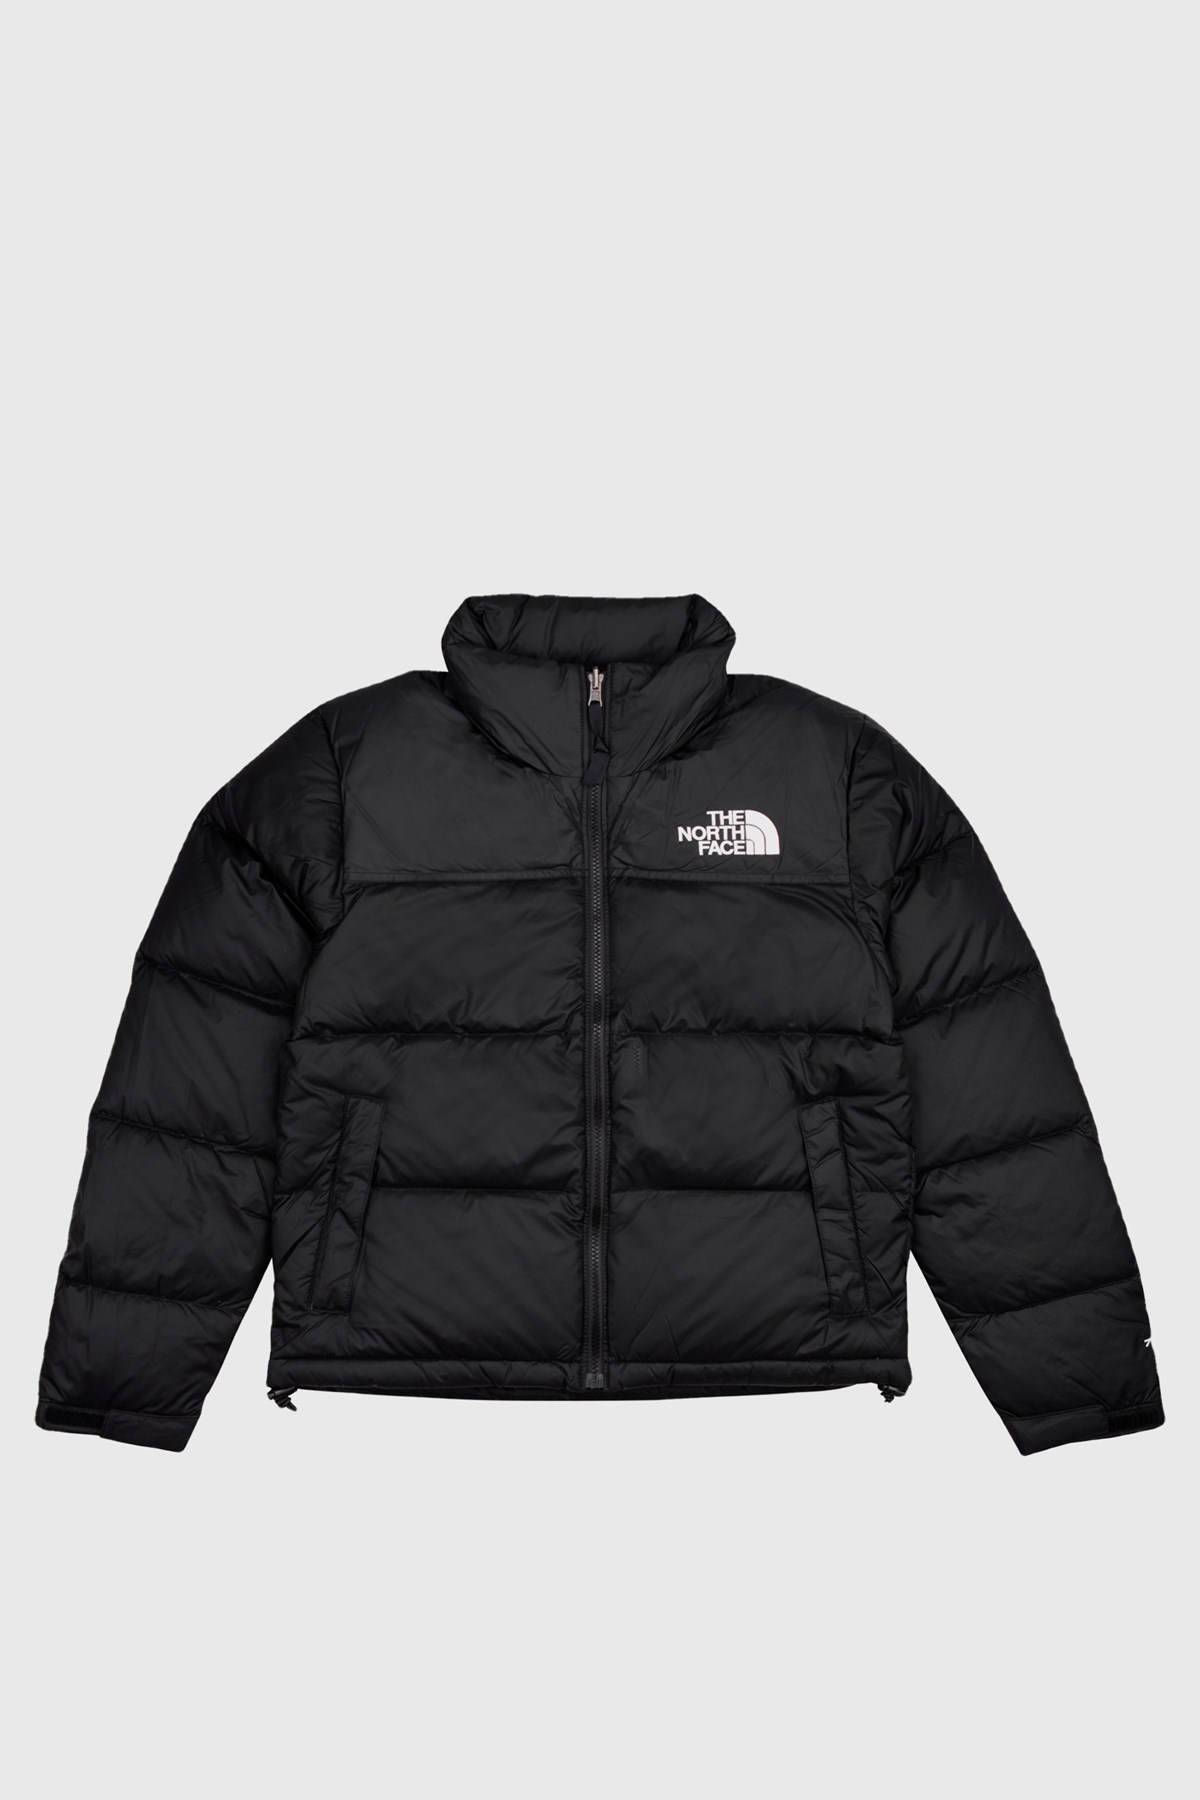 The North Face W 1996 Retro Nuptse Jacket Recycled TNF Black | WoodWood.com